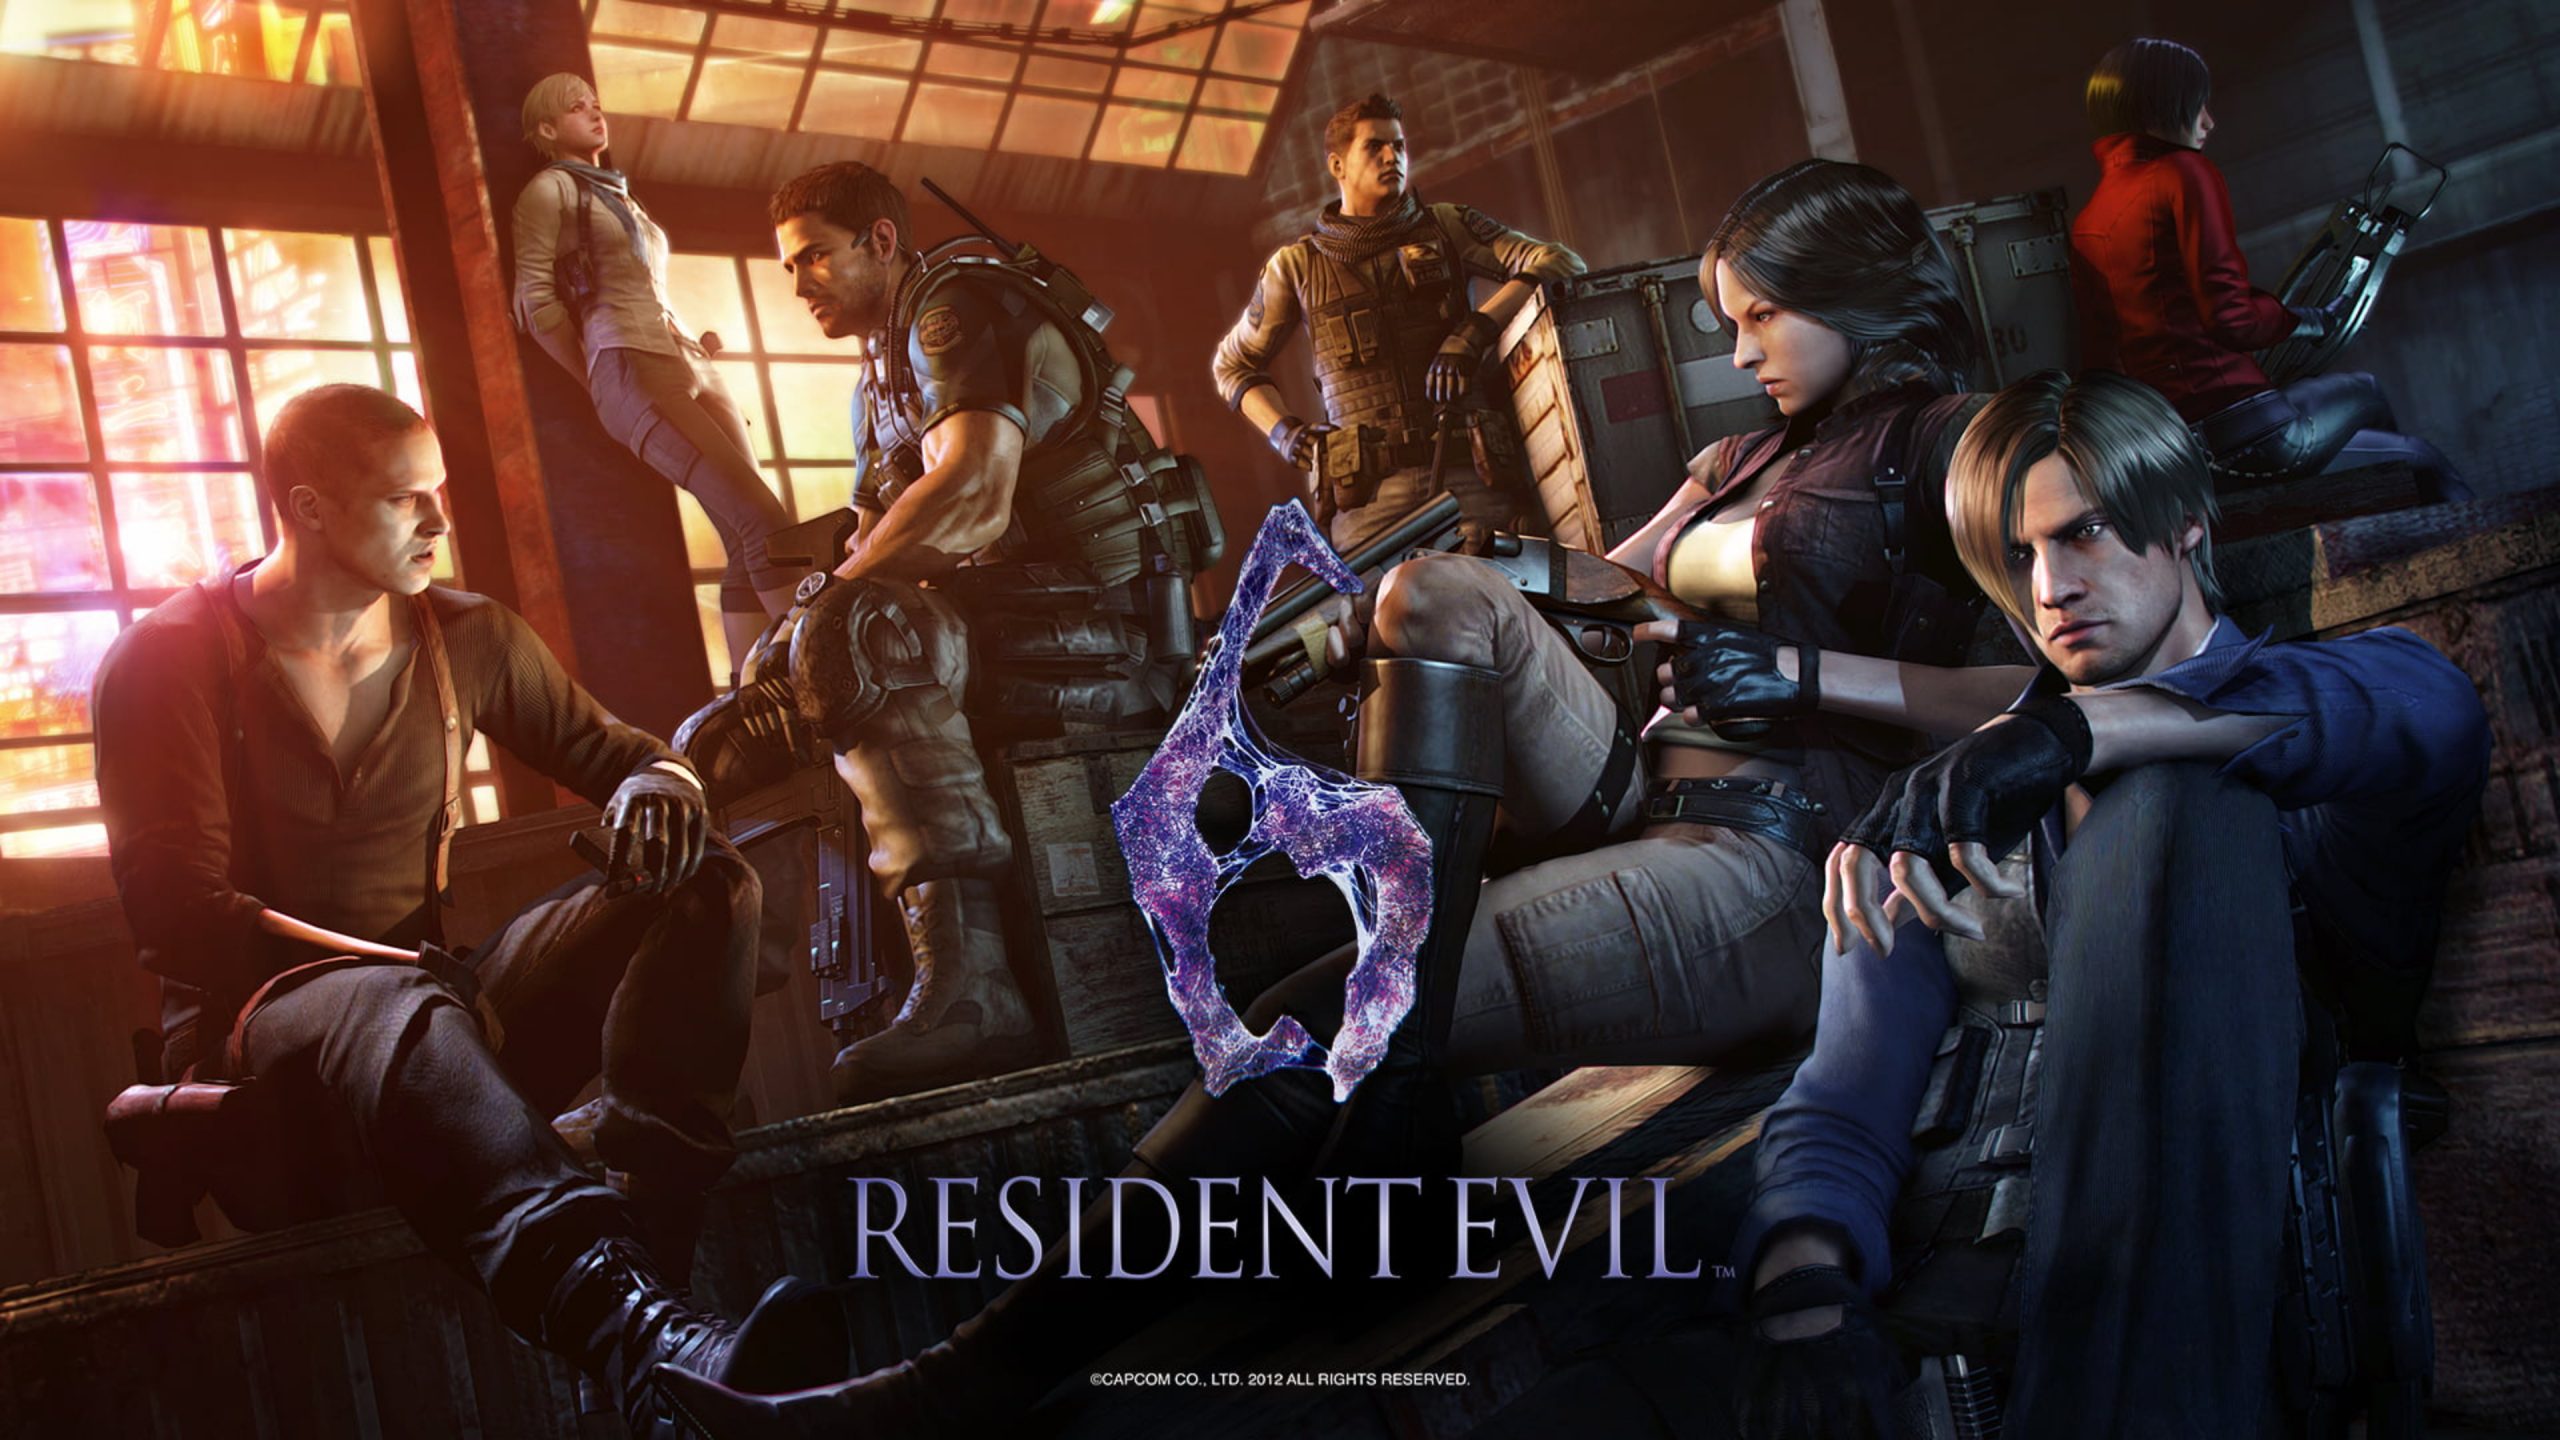 Capcom Resident Evil 6